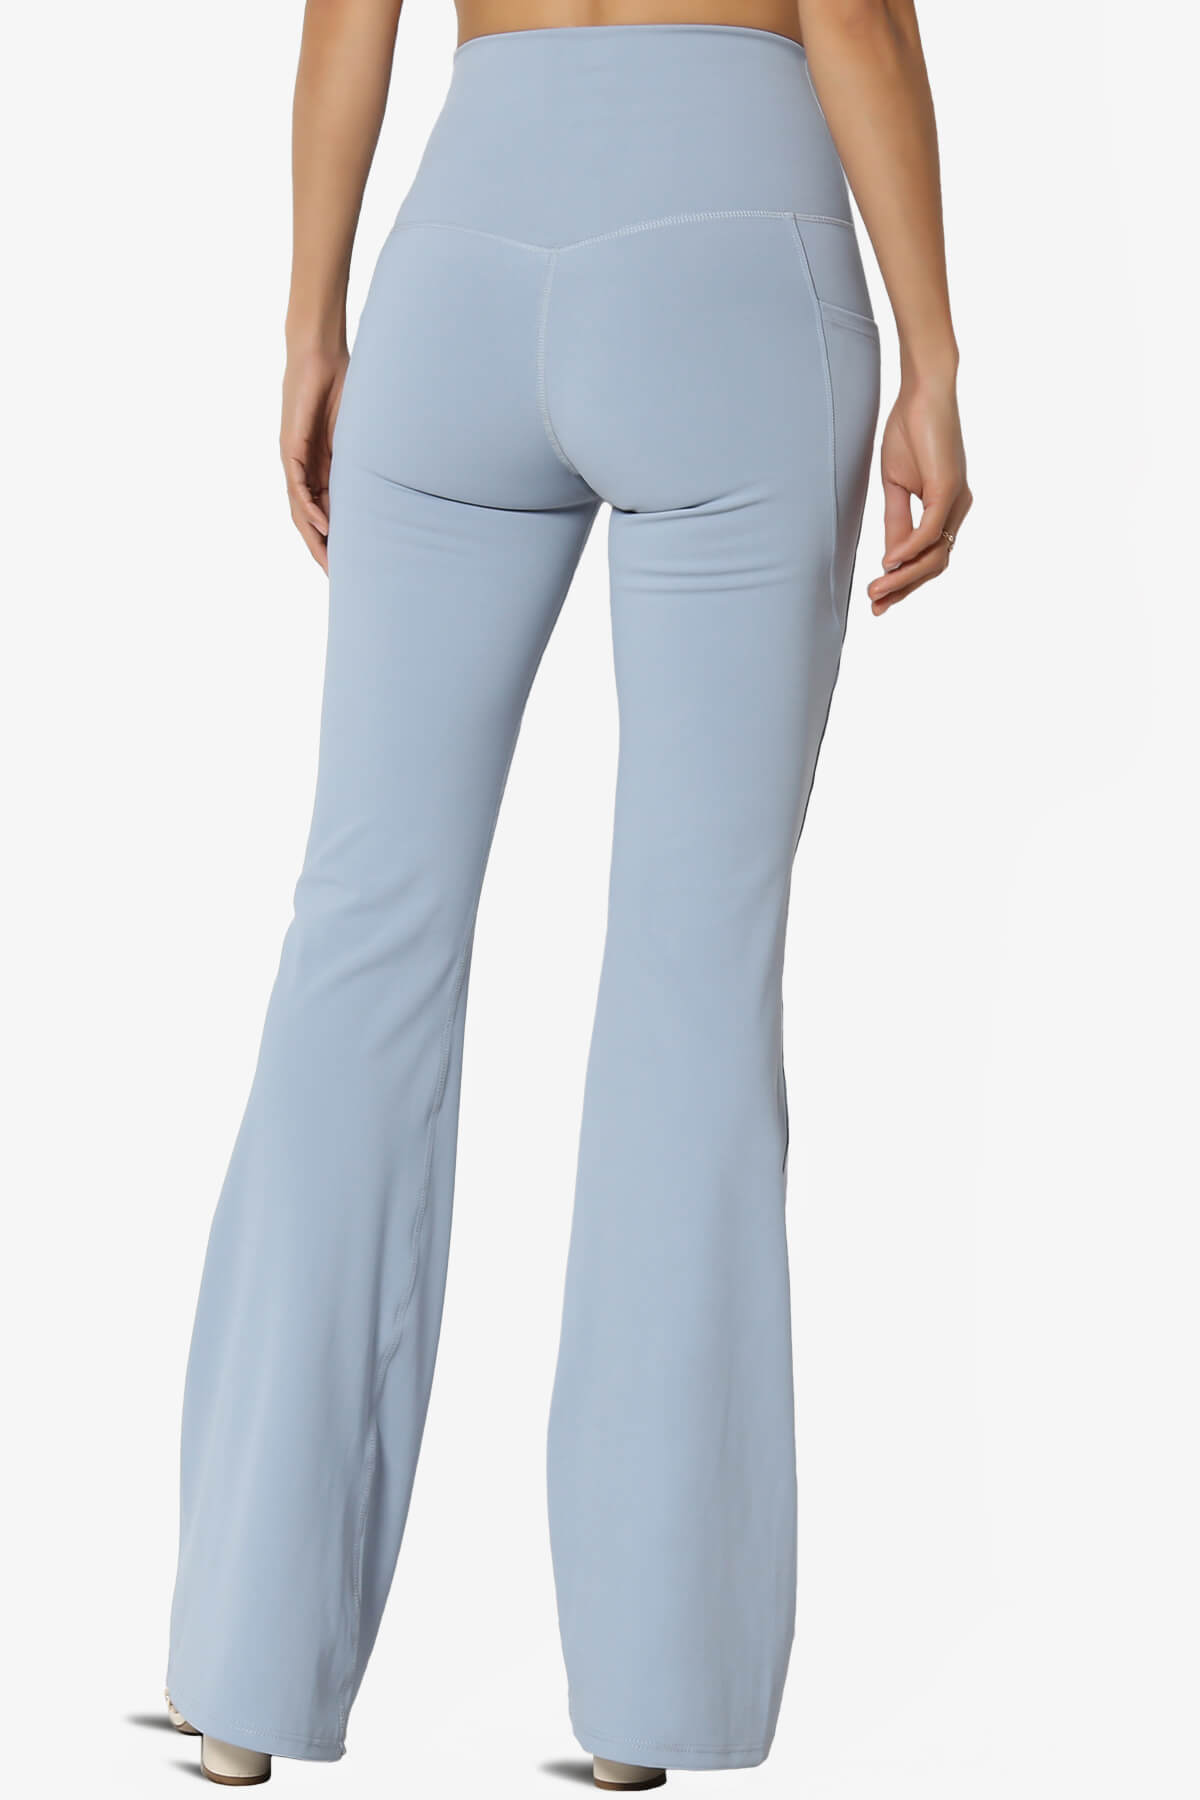 Gemma Athletic Pocket Flare Yoga Pants ASH BLUE_2